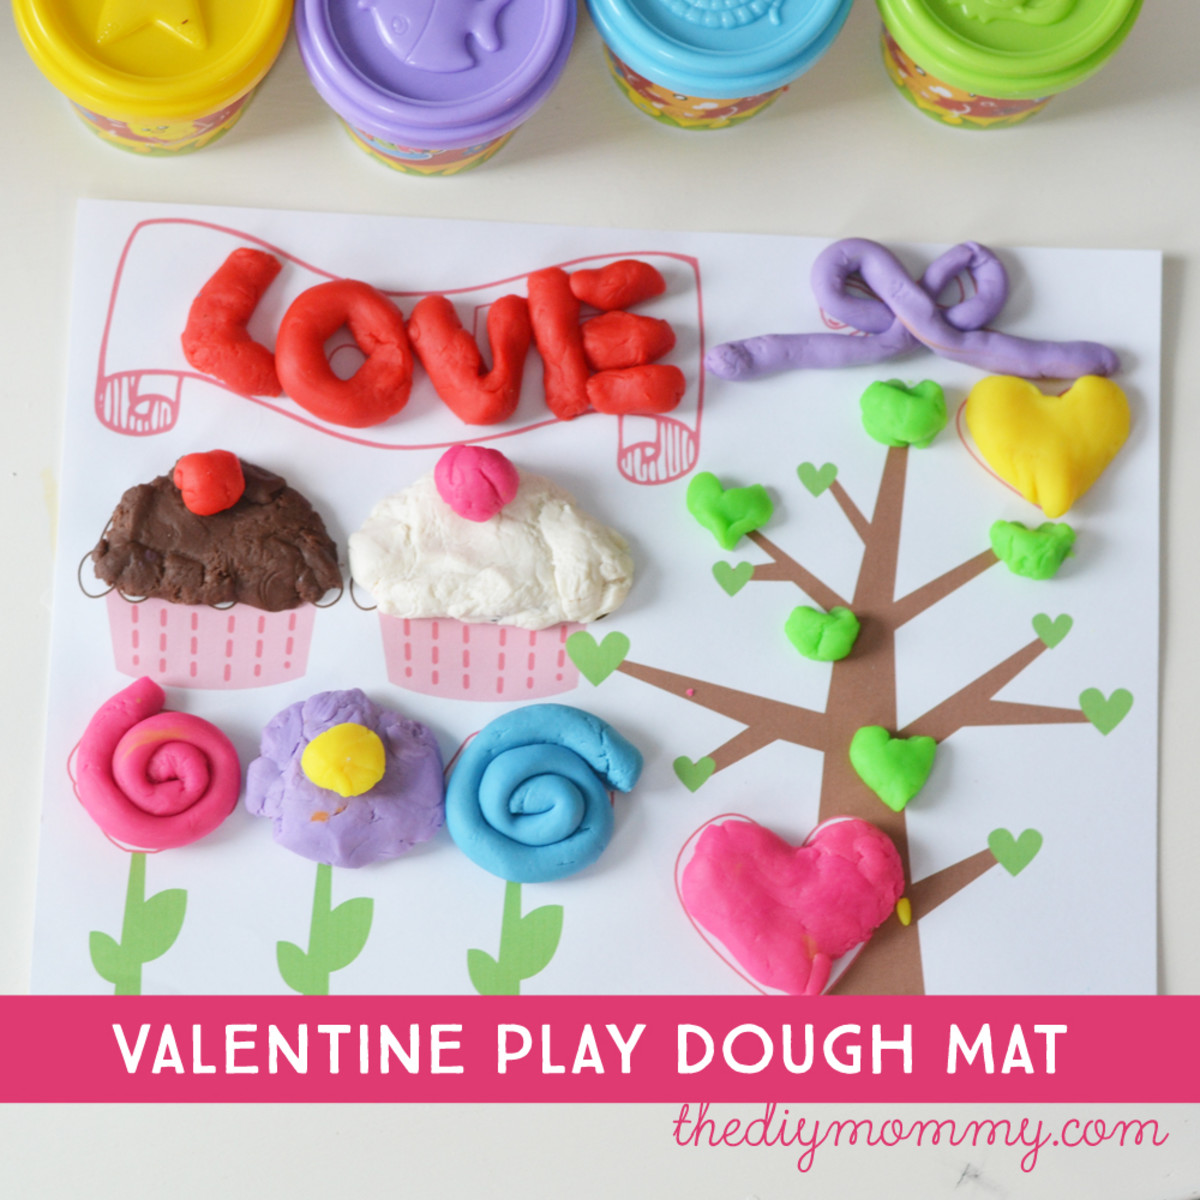 Play-Doh activity